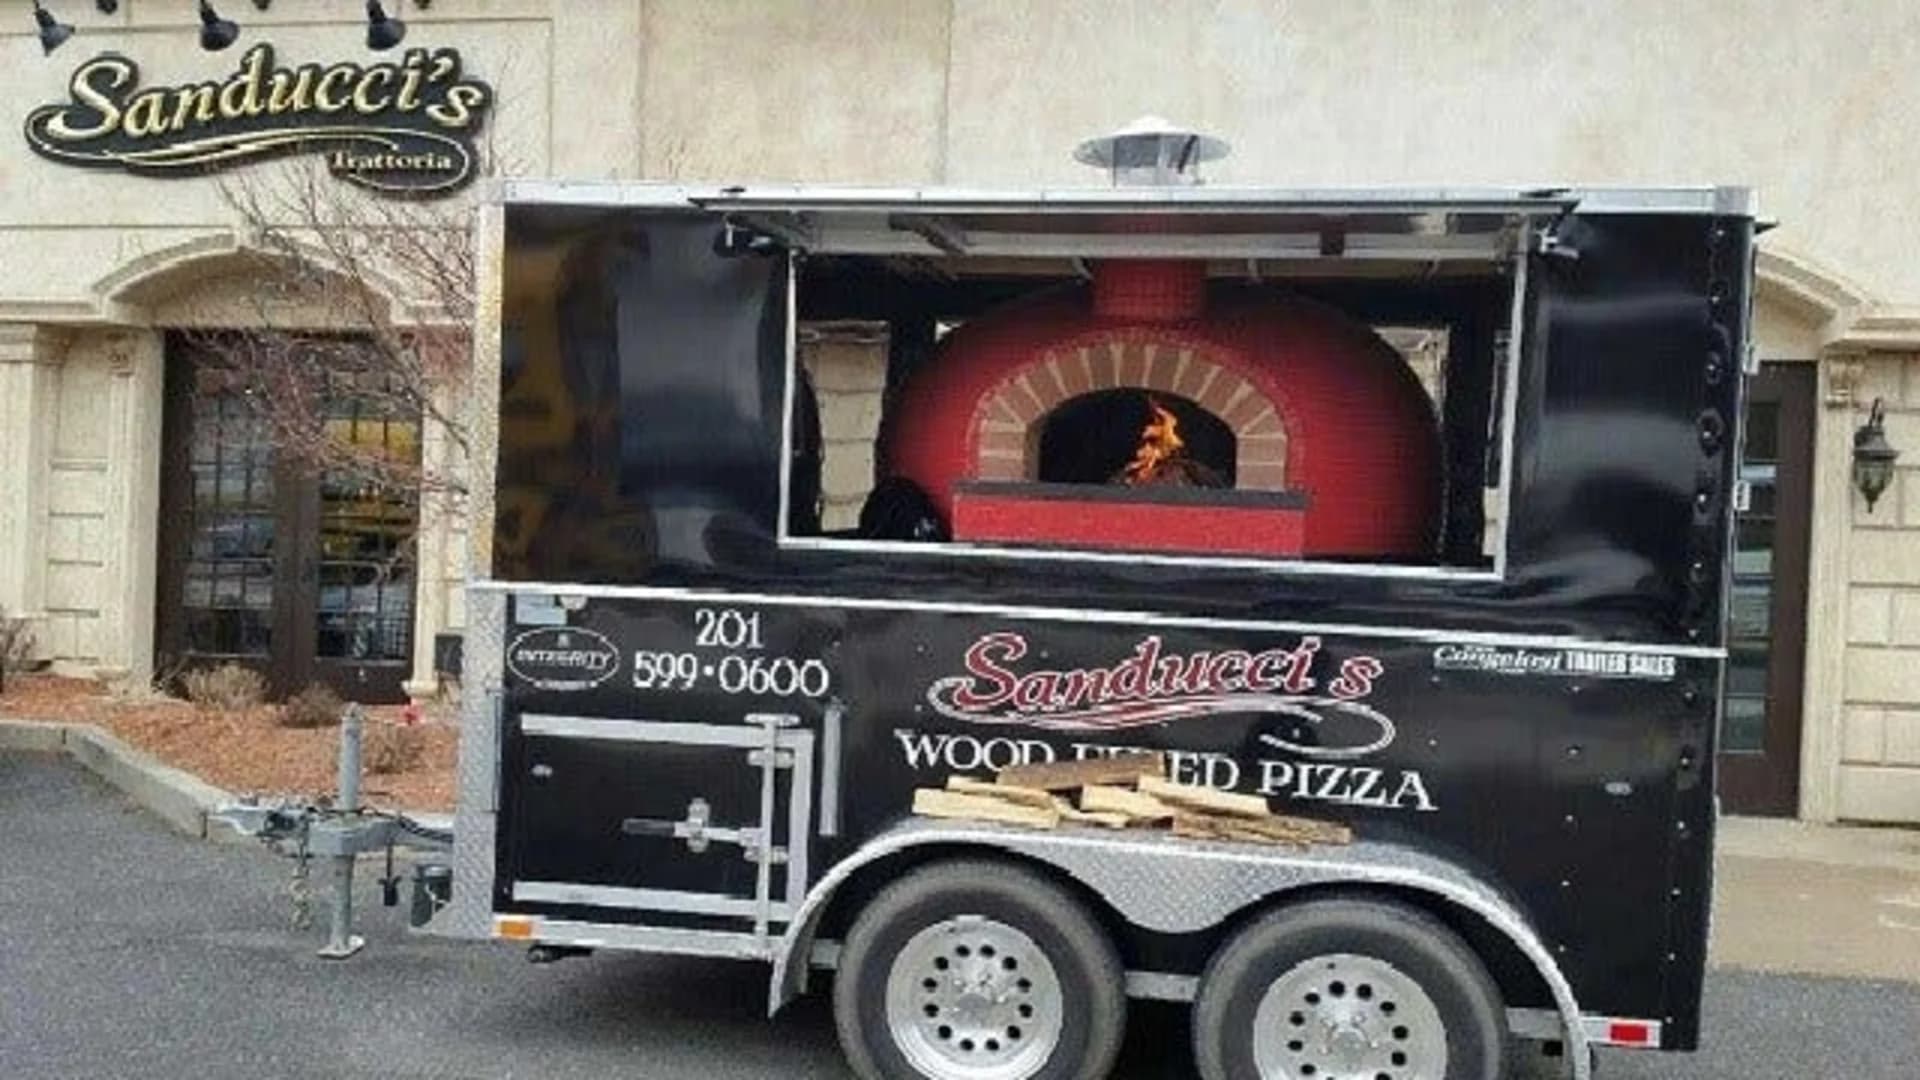 Food Truck Friday: Sanducci's Wood Fired Pizza